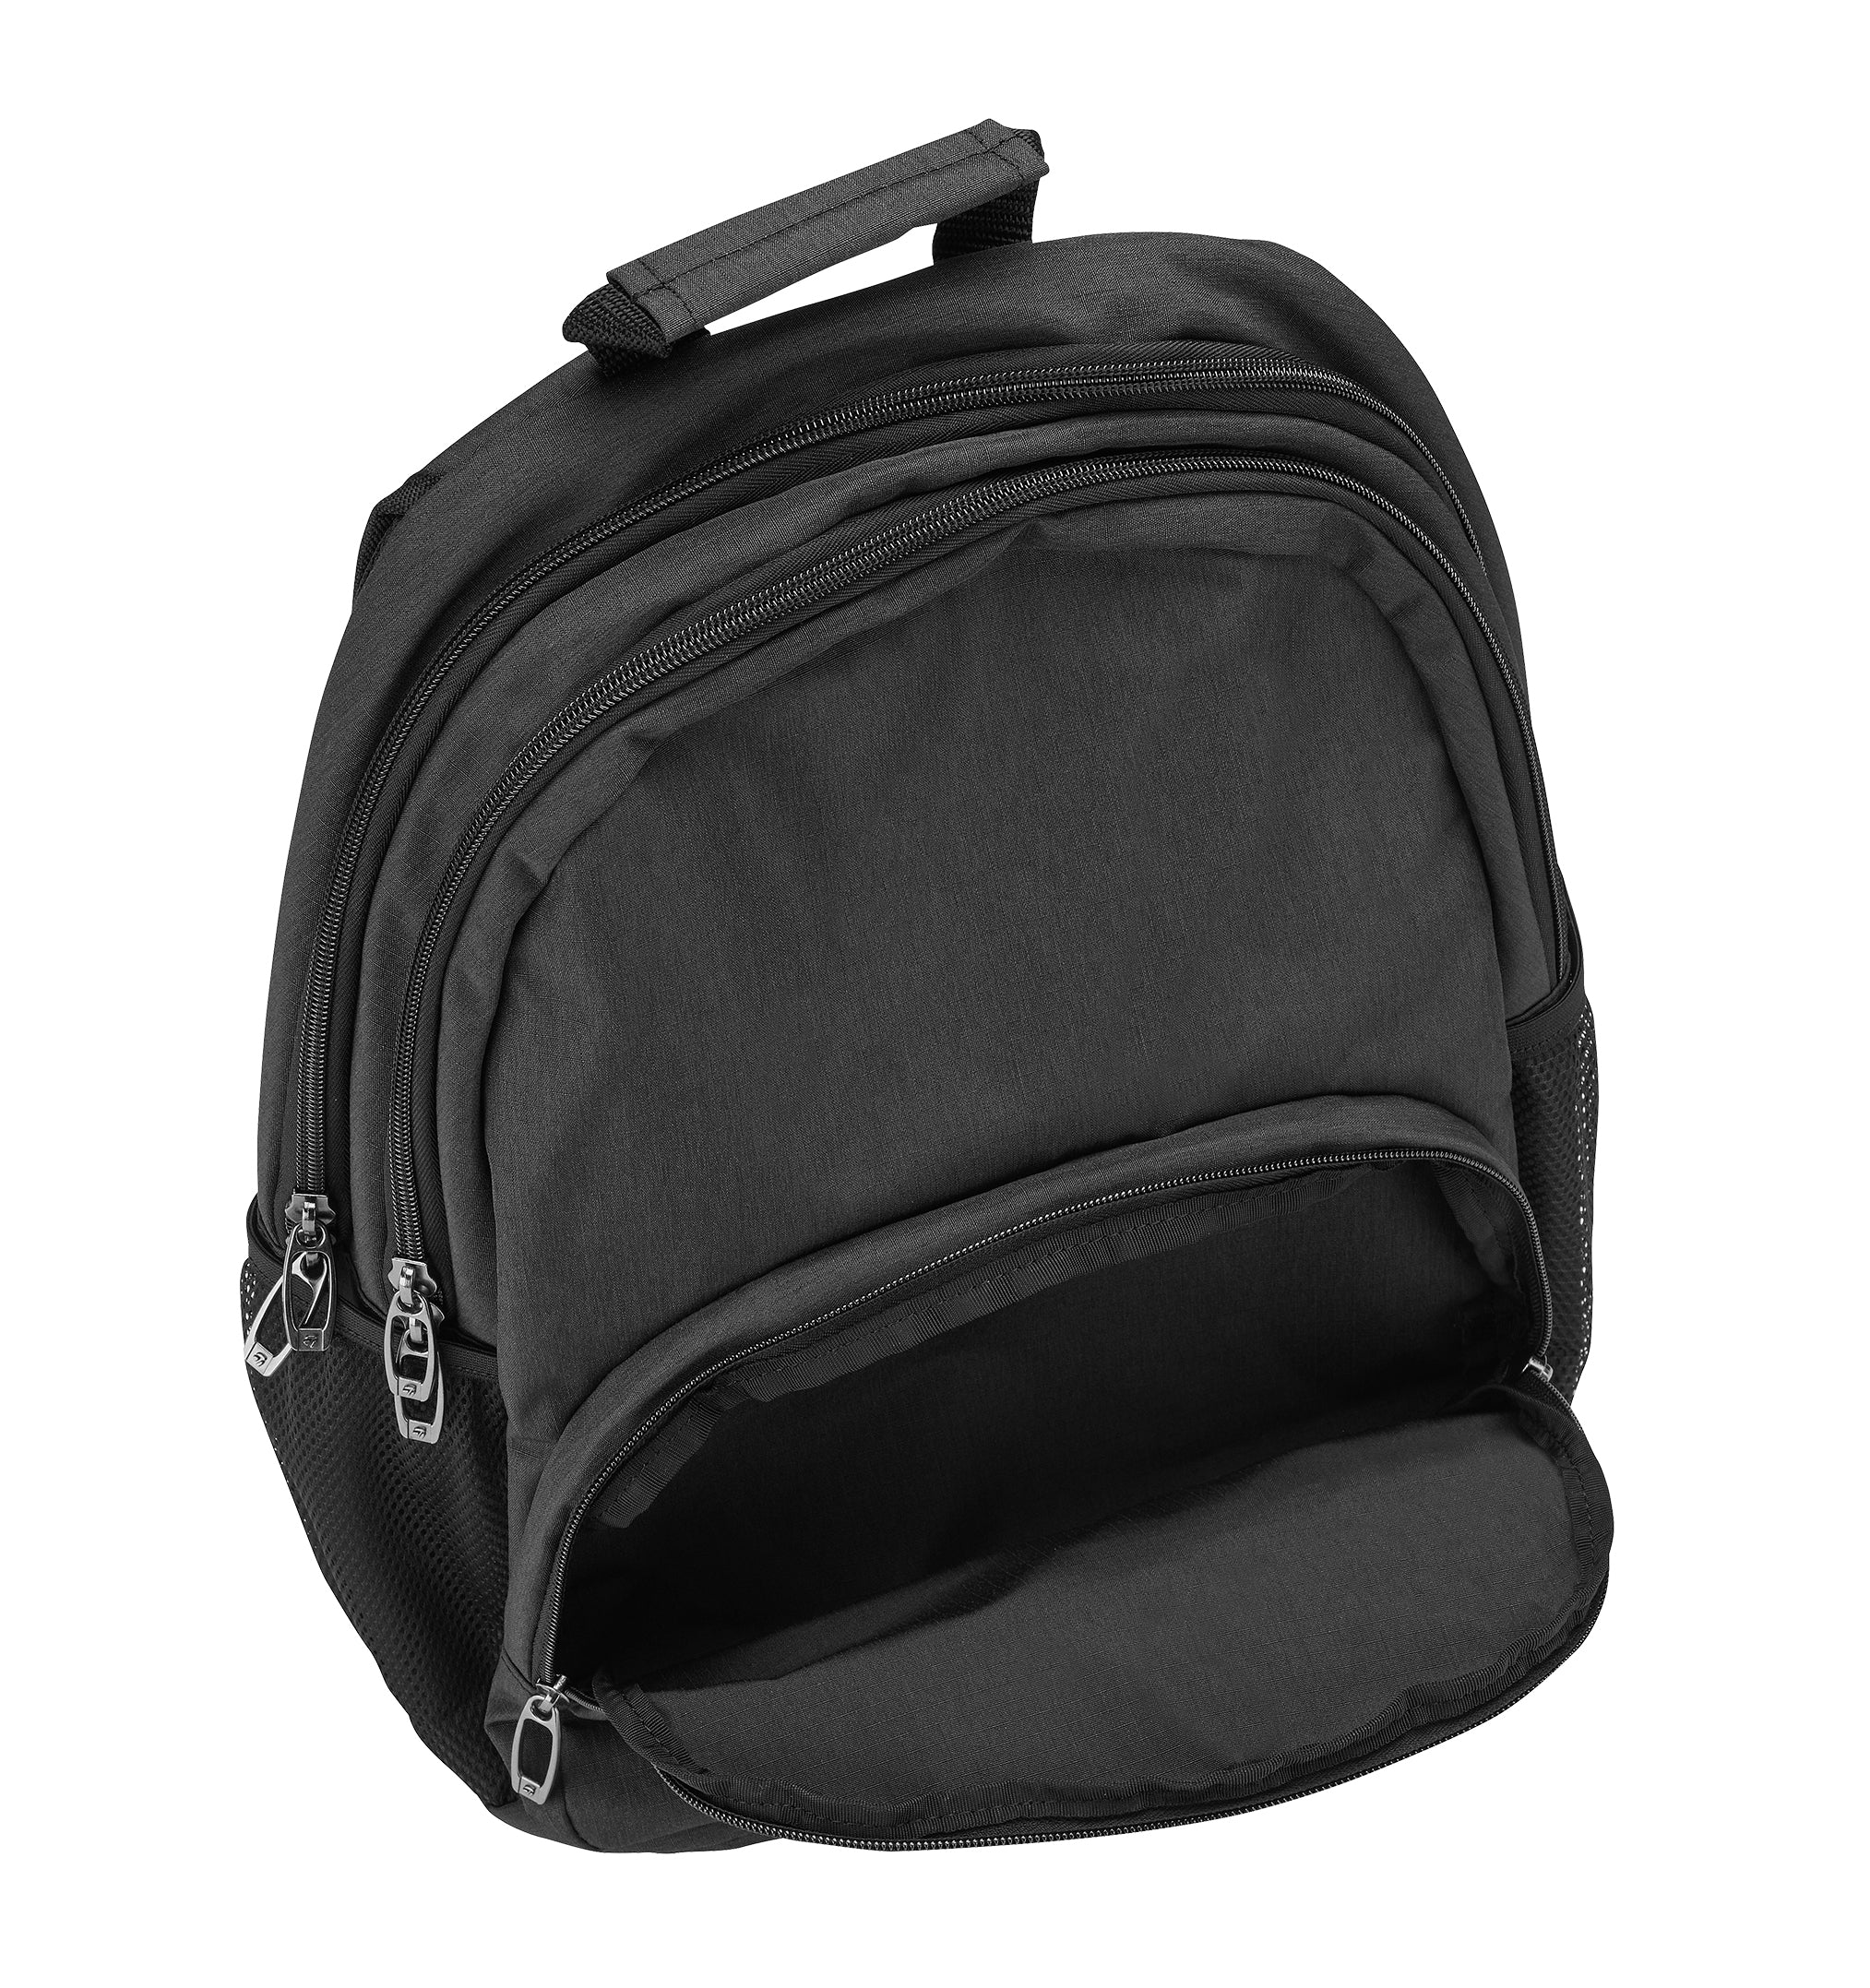 TaylorMade Performance Backpack N89475 Black | Function18